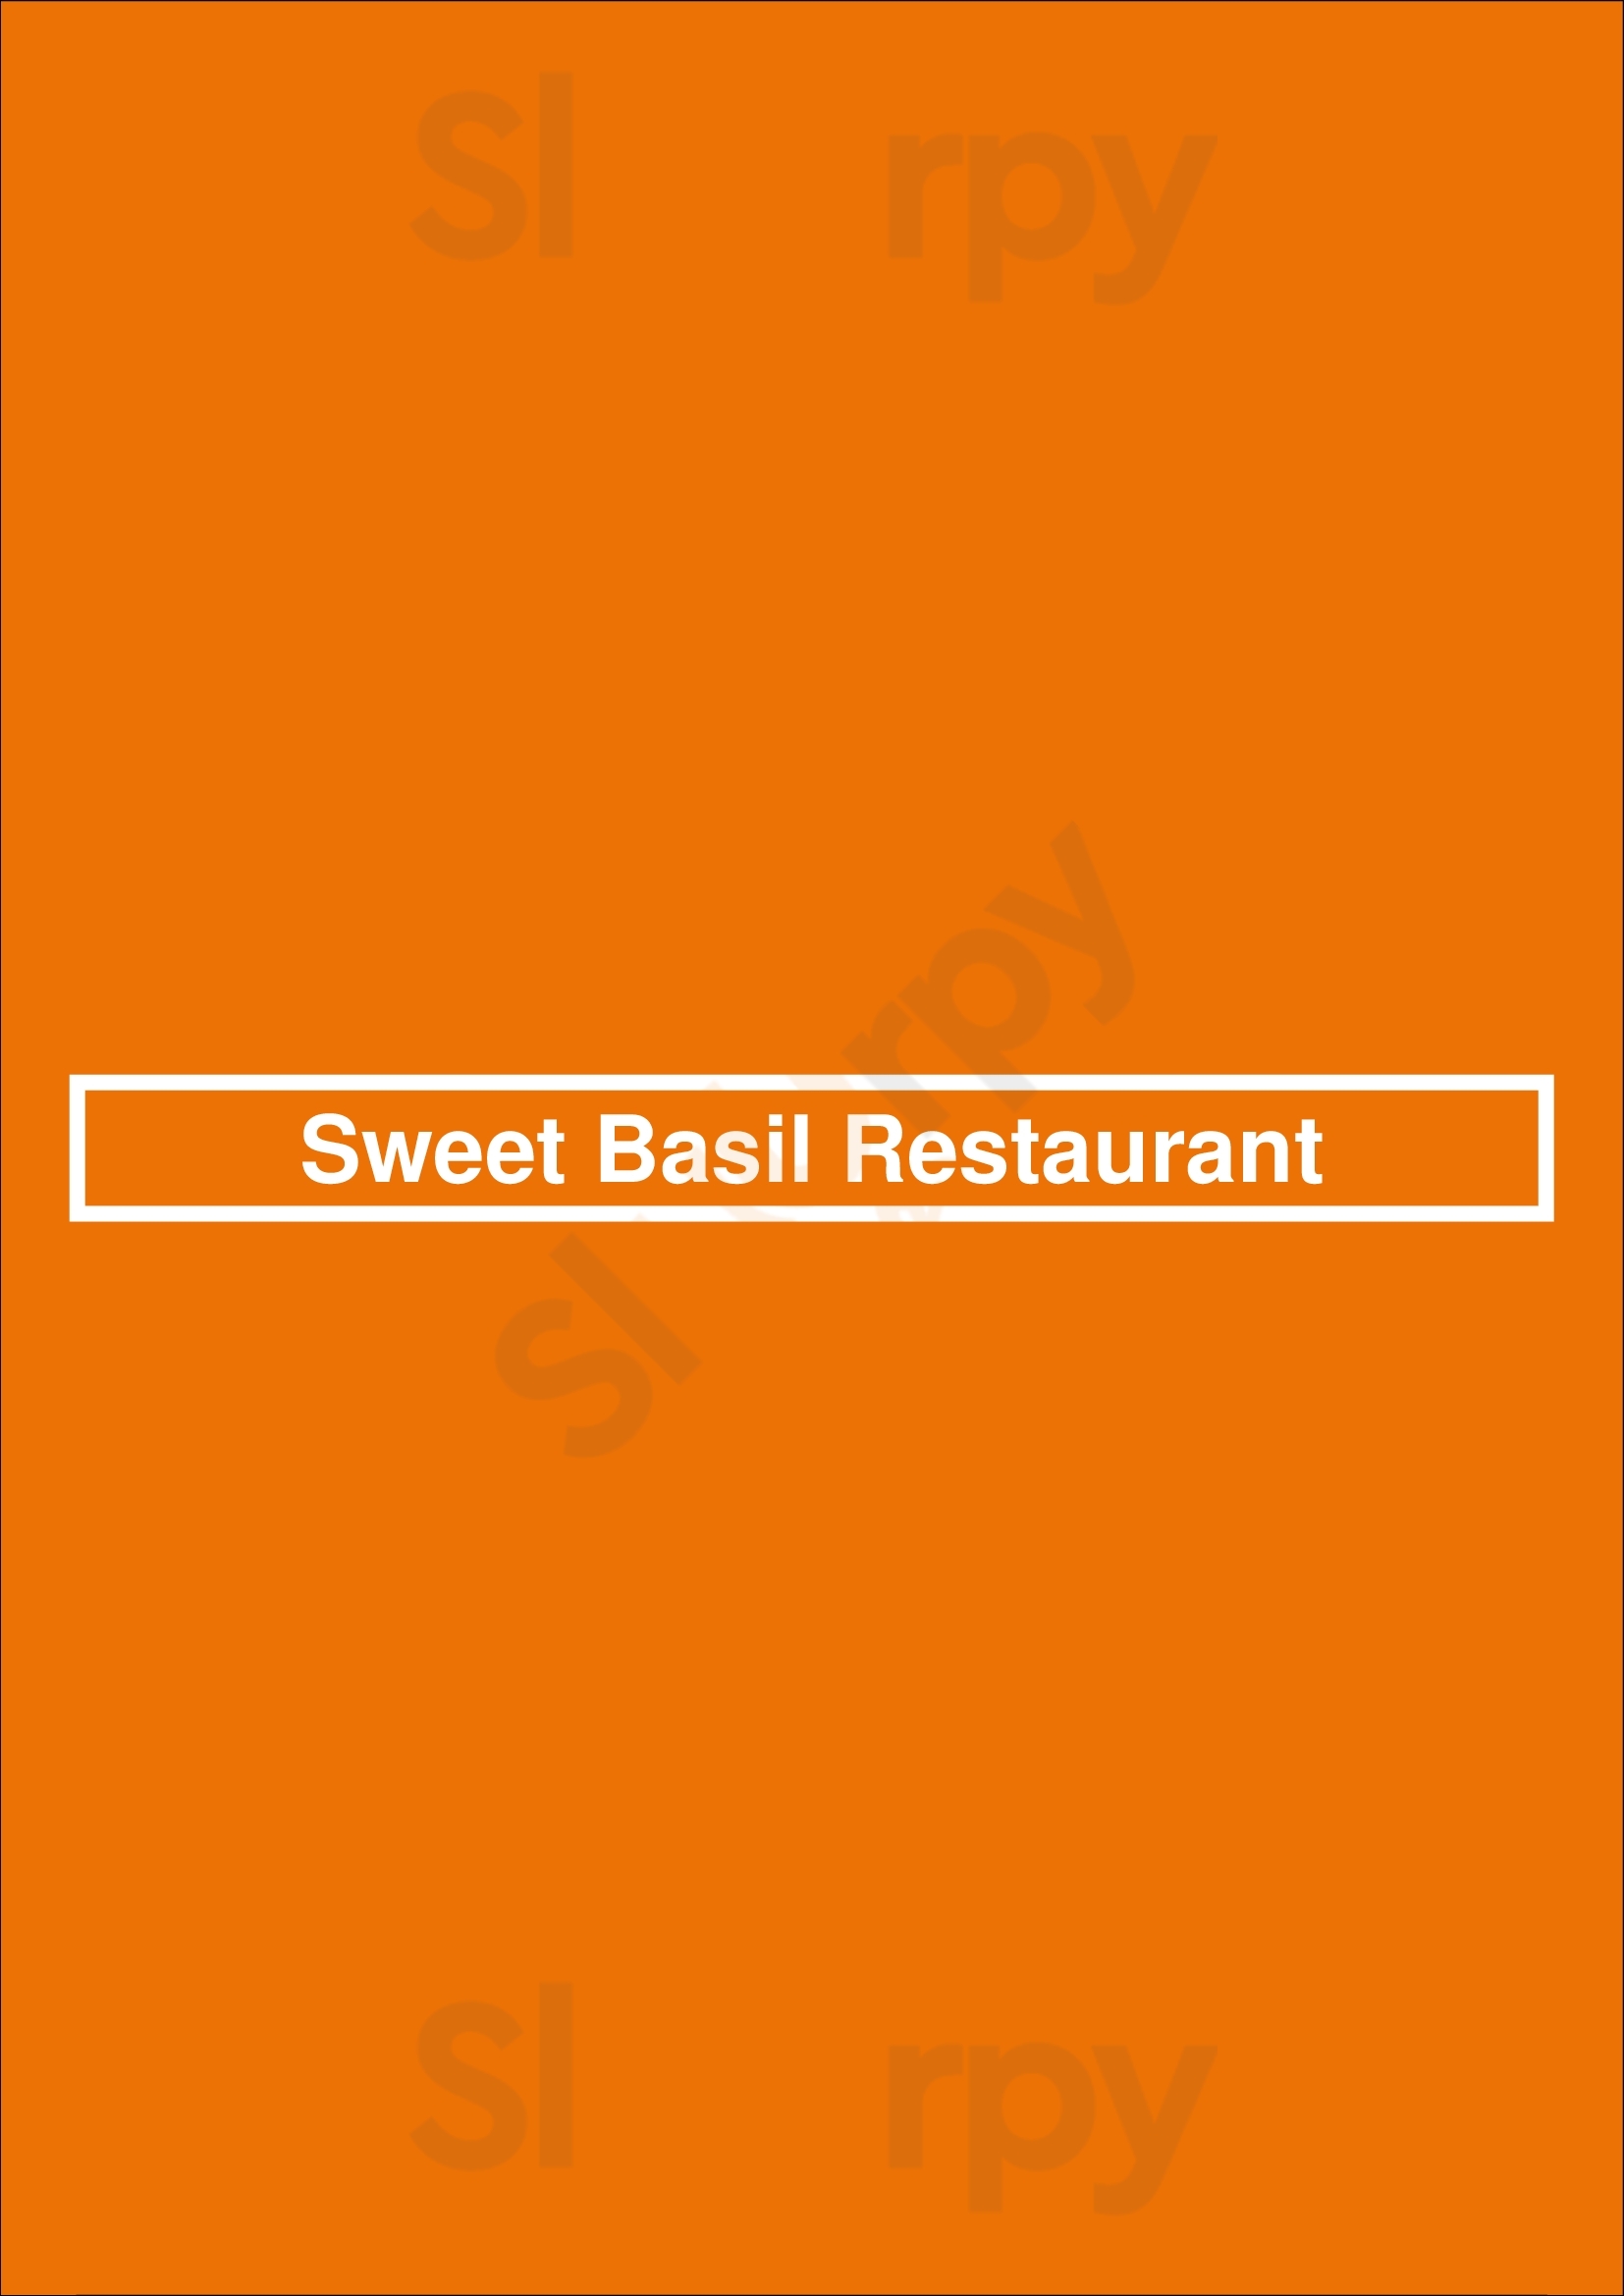 Sweet Basil Restaurant Ottawa Menu - 1